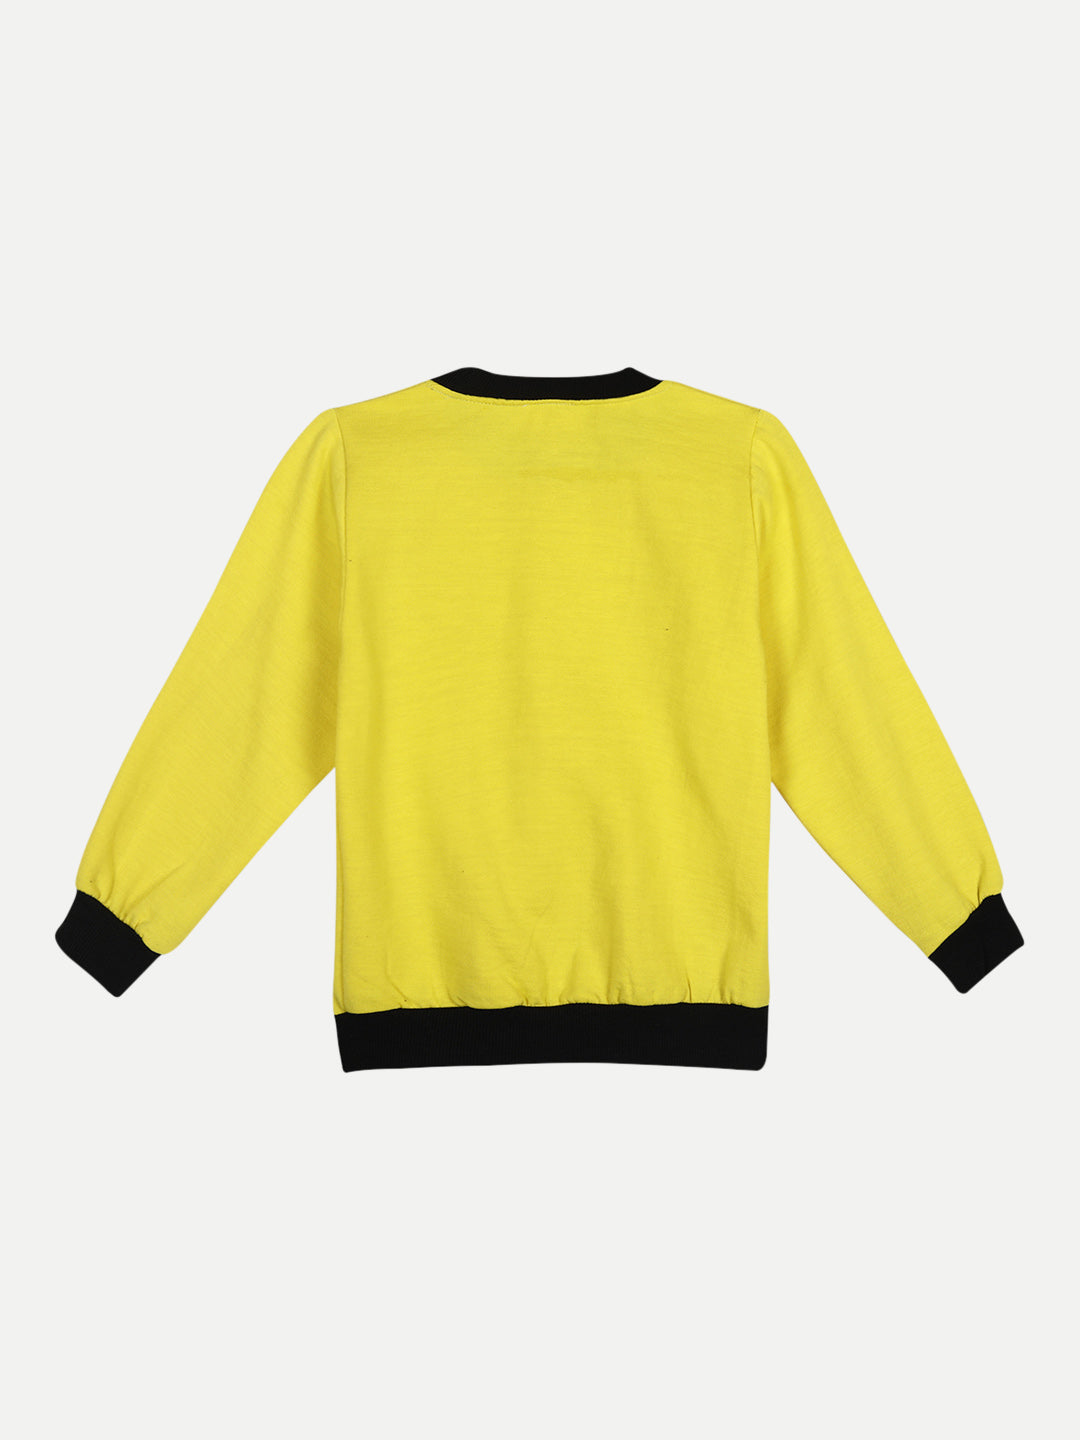 Cutiekins Pack of 2 Sweatshirt -Yellow & Royal Blue